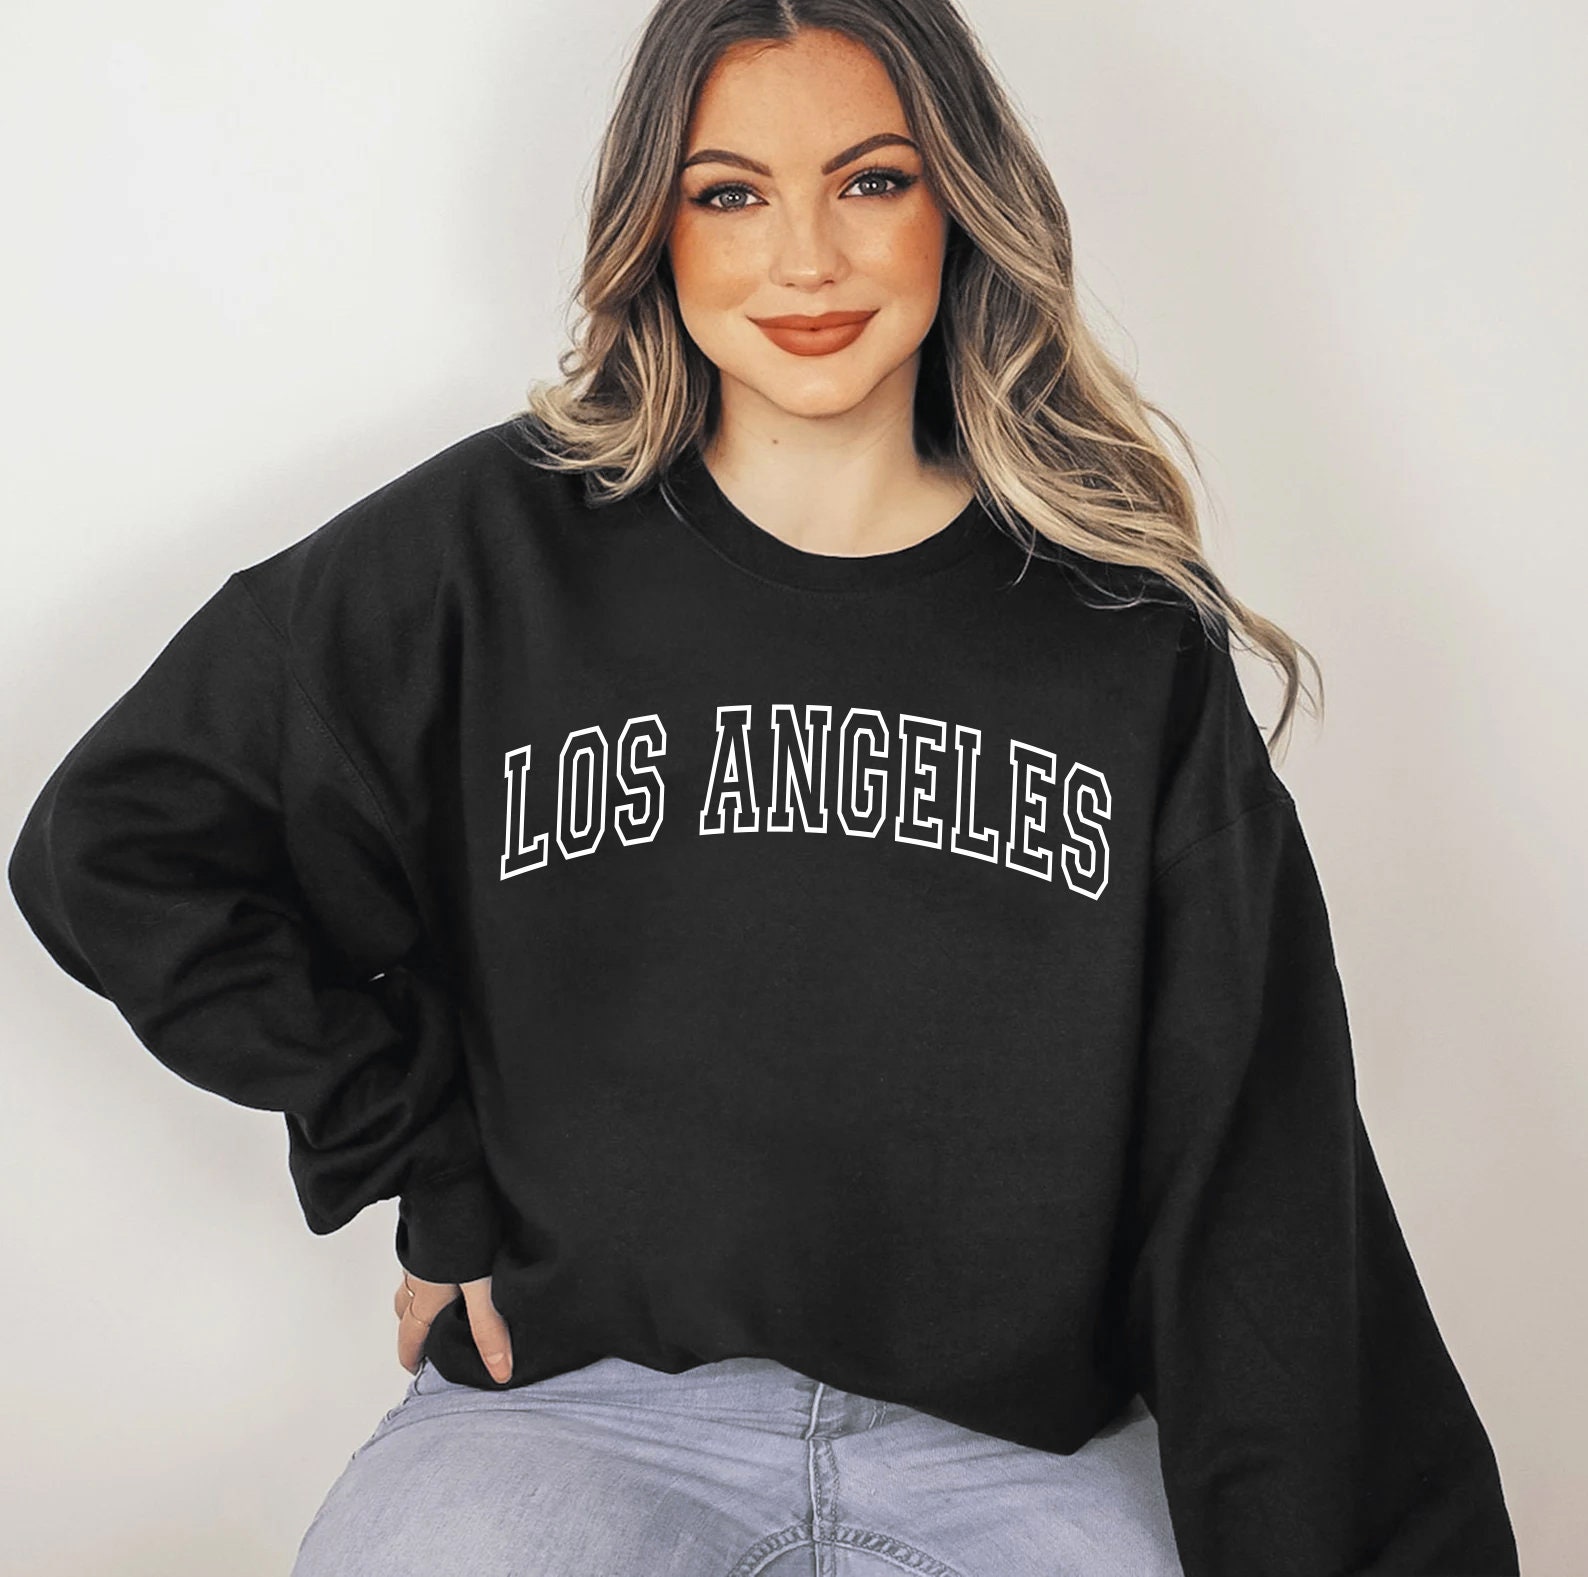 Los angeles sweatshirt for sale  